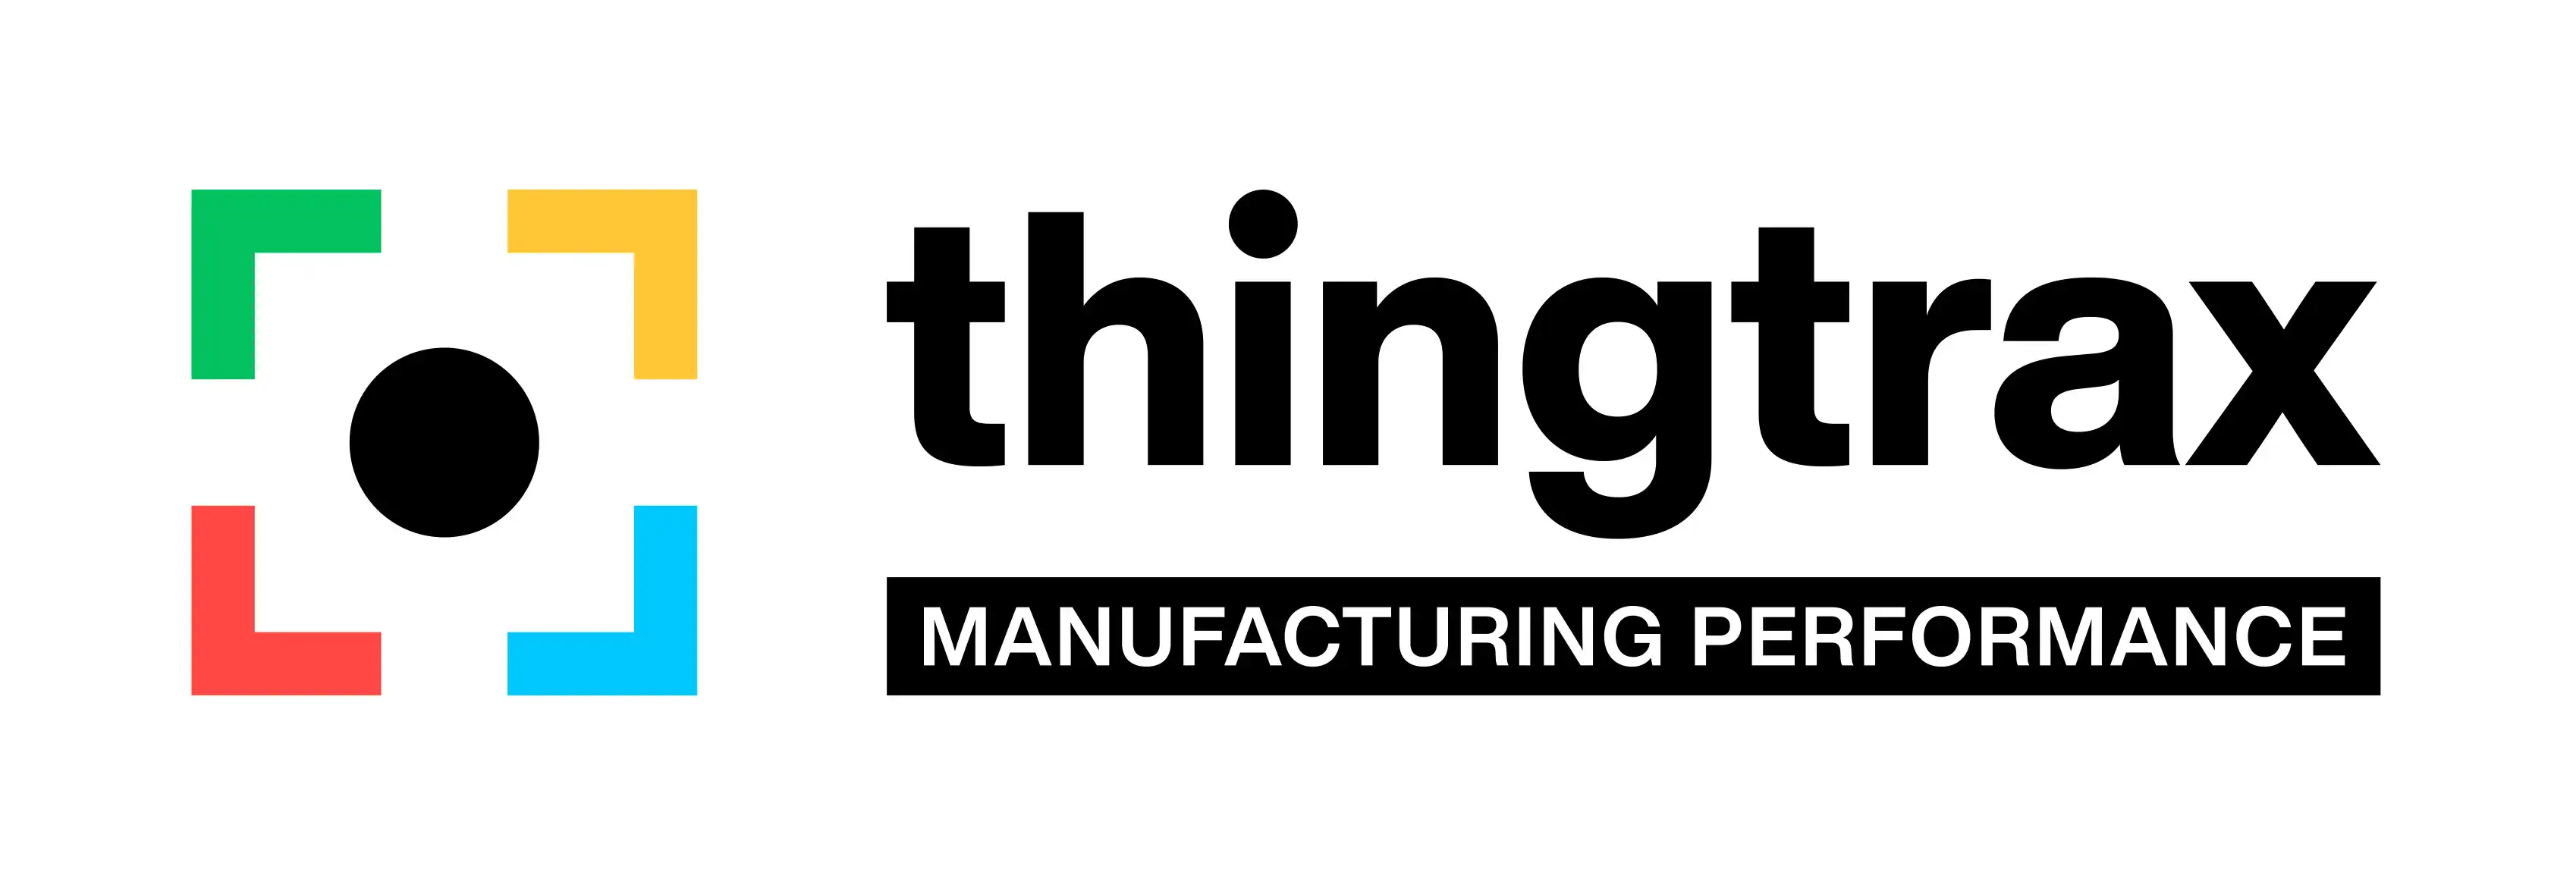 Thingtrax Manufacturing Performance - Logo 